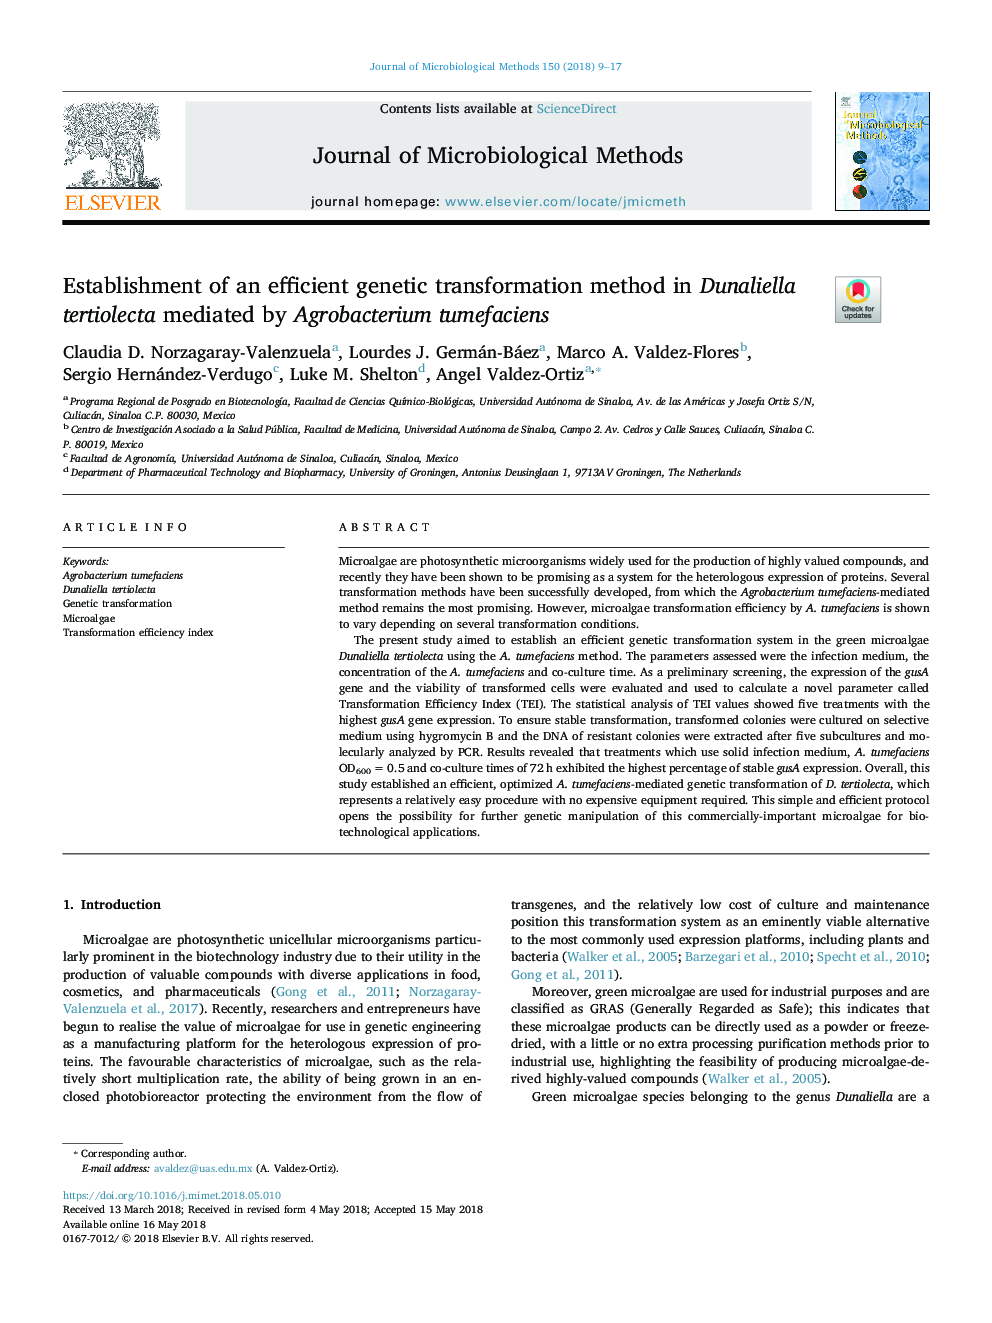 Establishment of an efficient genetic transformation method in Dunaliella tertiolecta mediated by Agrobacterium tumefaciens